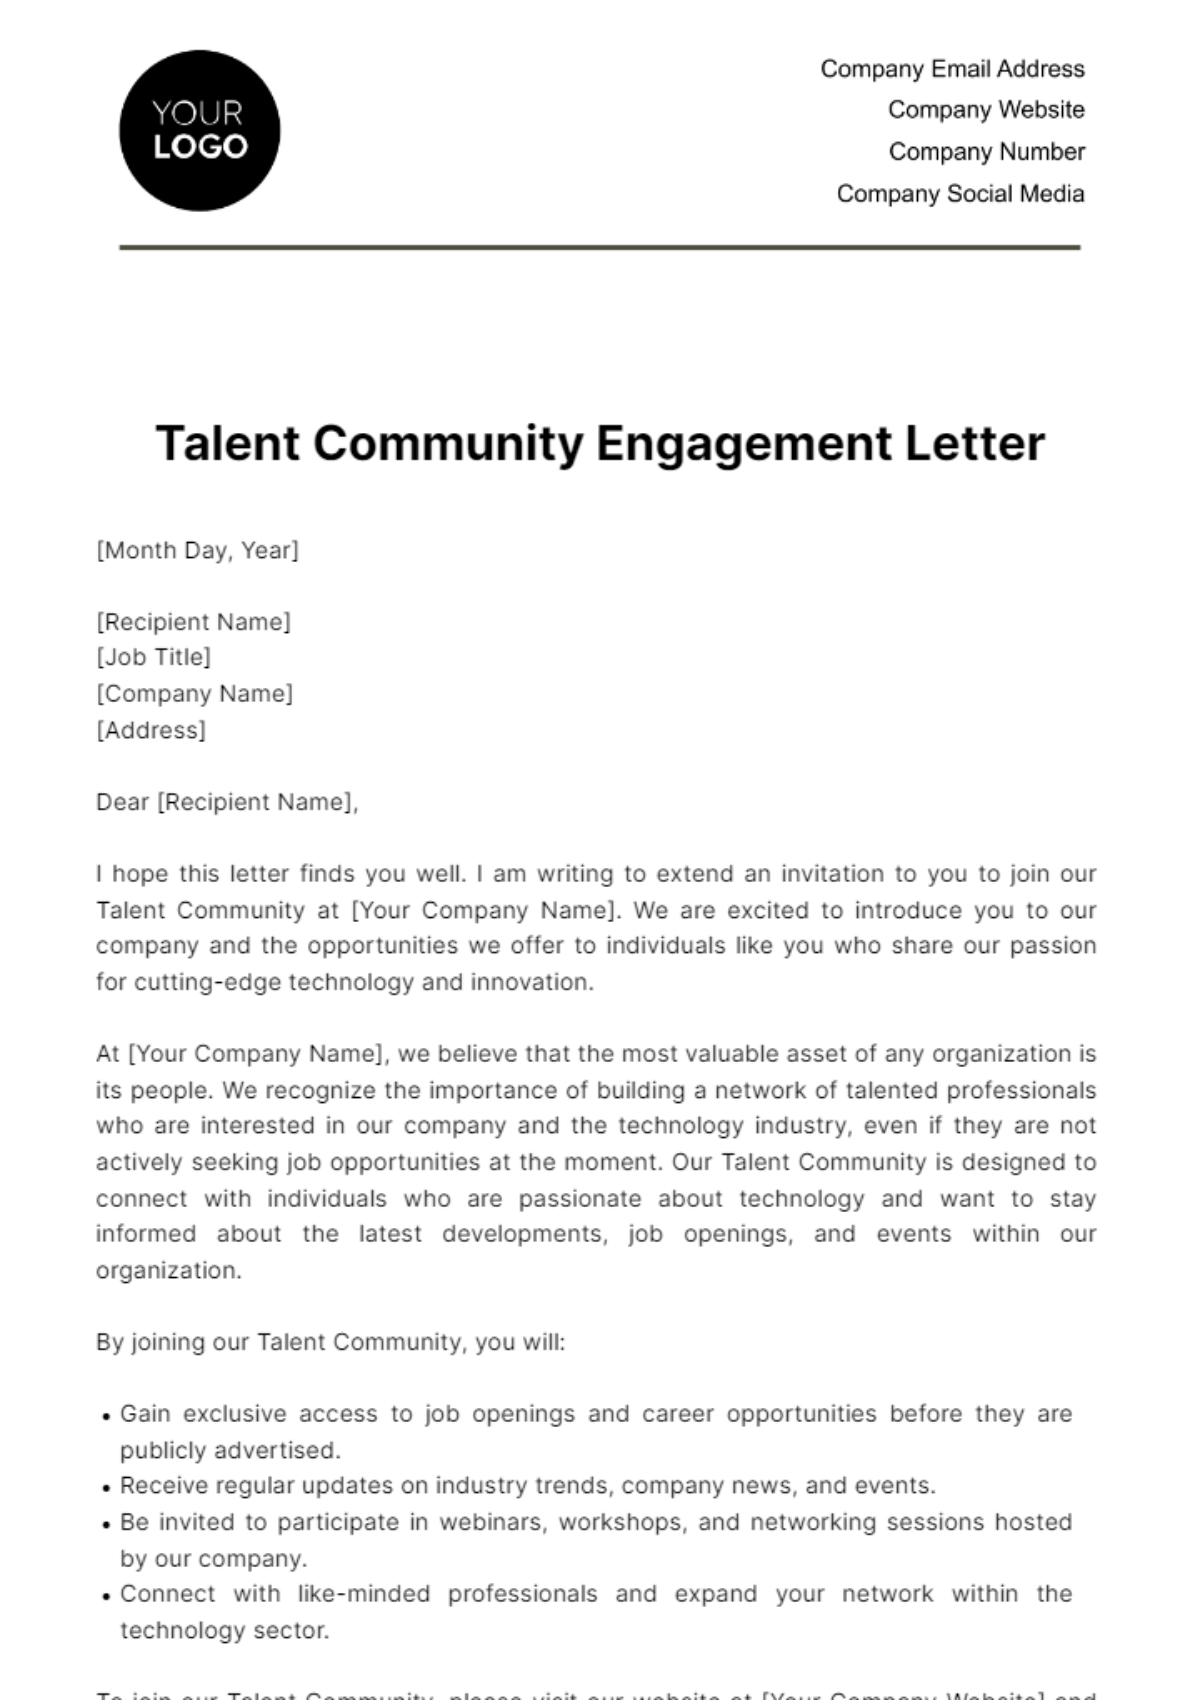 Free Talent Community Engagement Letter HR Template